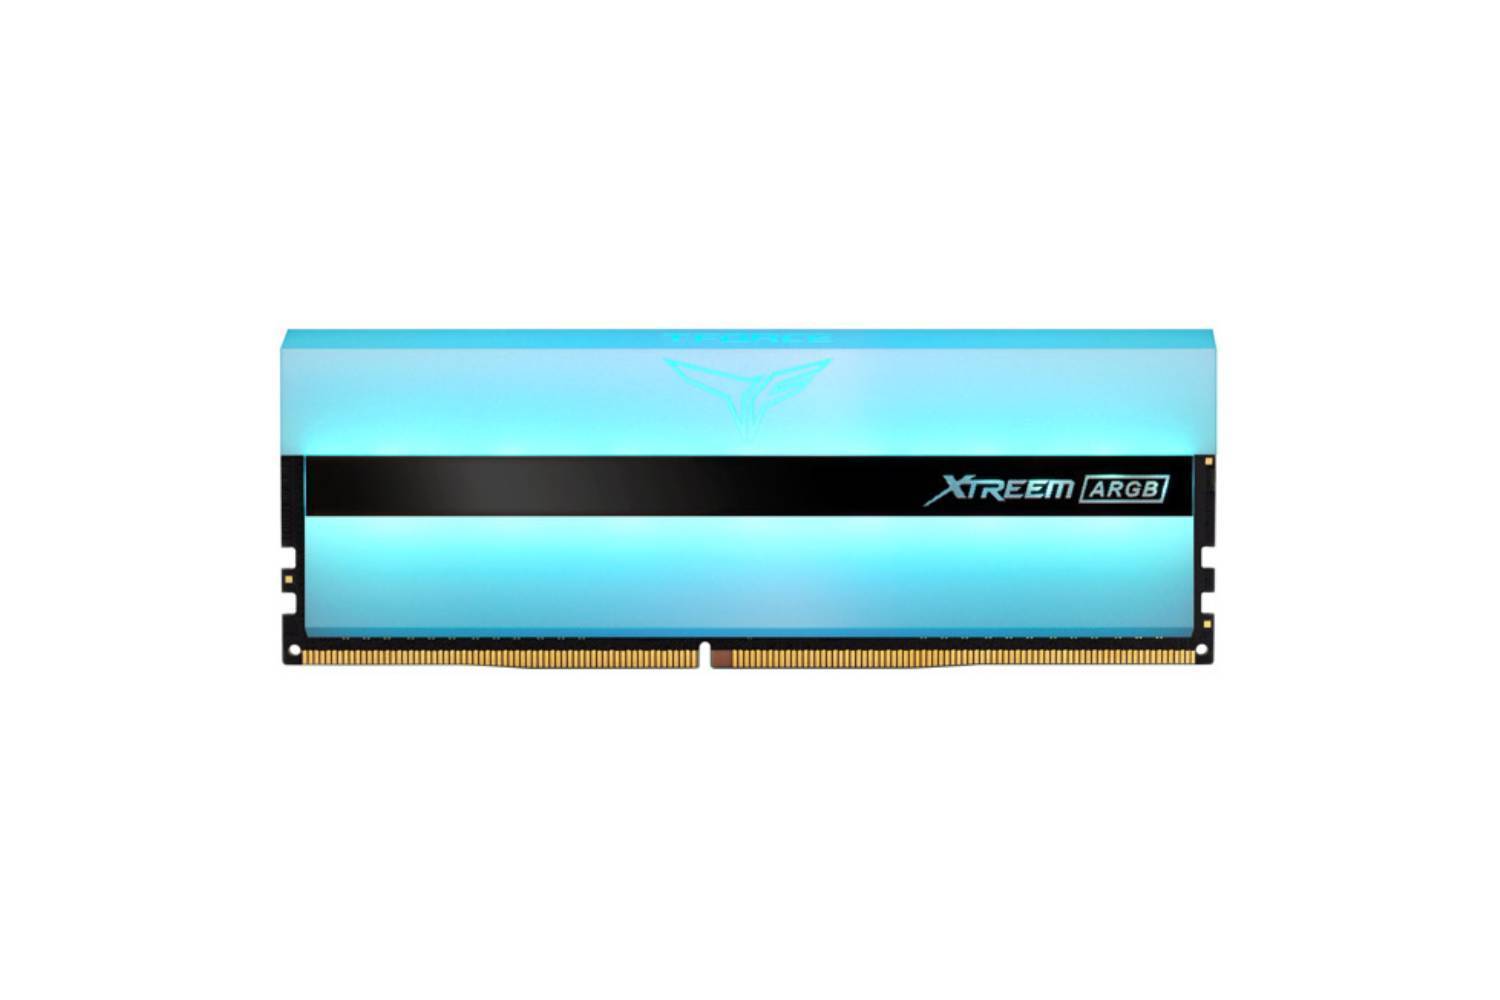 TEAMGROUP XTREEM ARGB DDR4 4000Mhz 16GB (8GB x 2) CL18 Gaming Memory